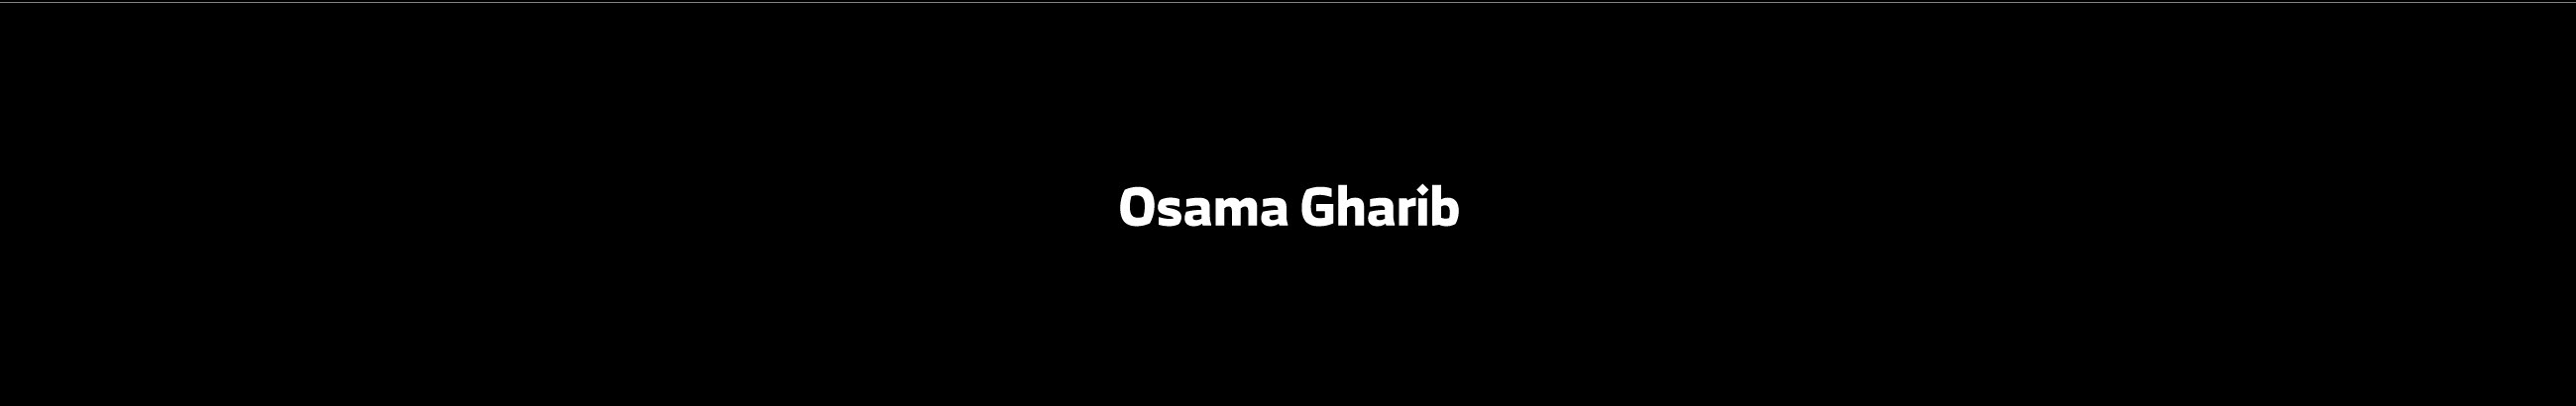 Osama Gharib's profile banner